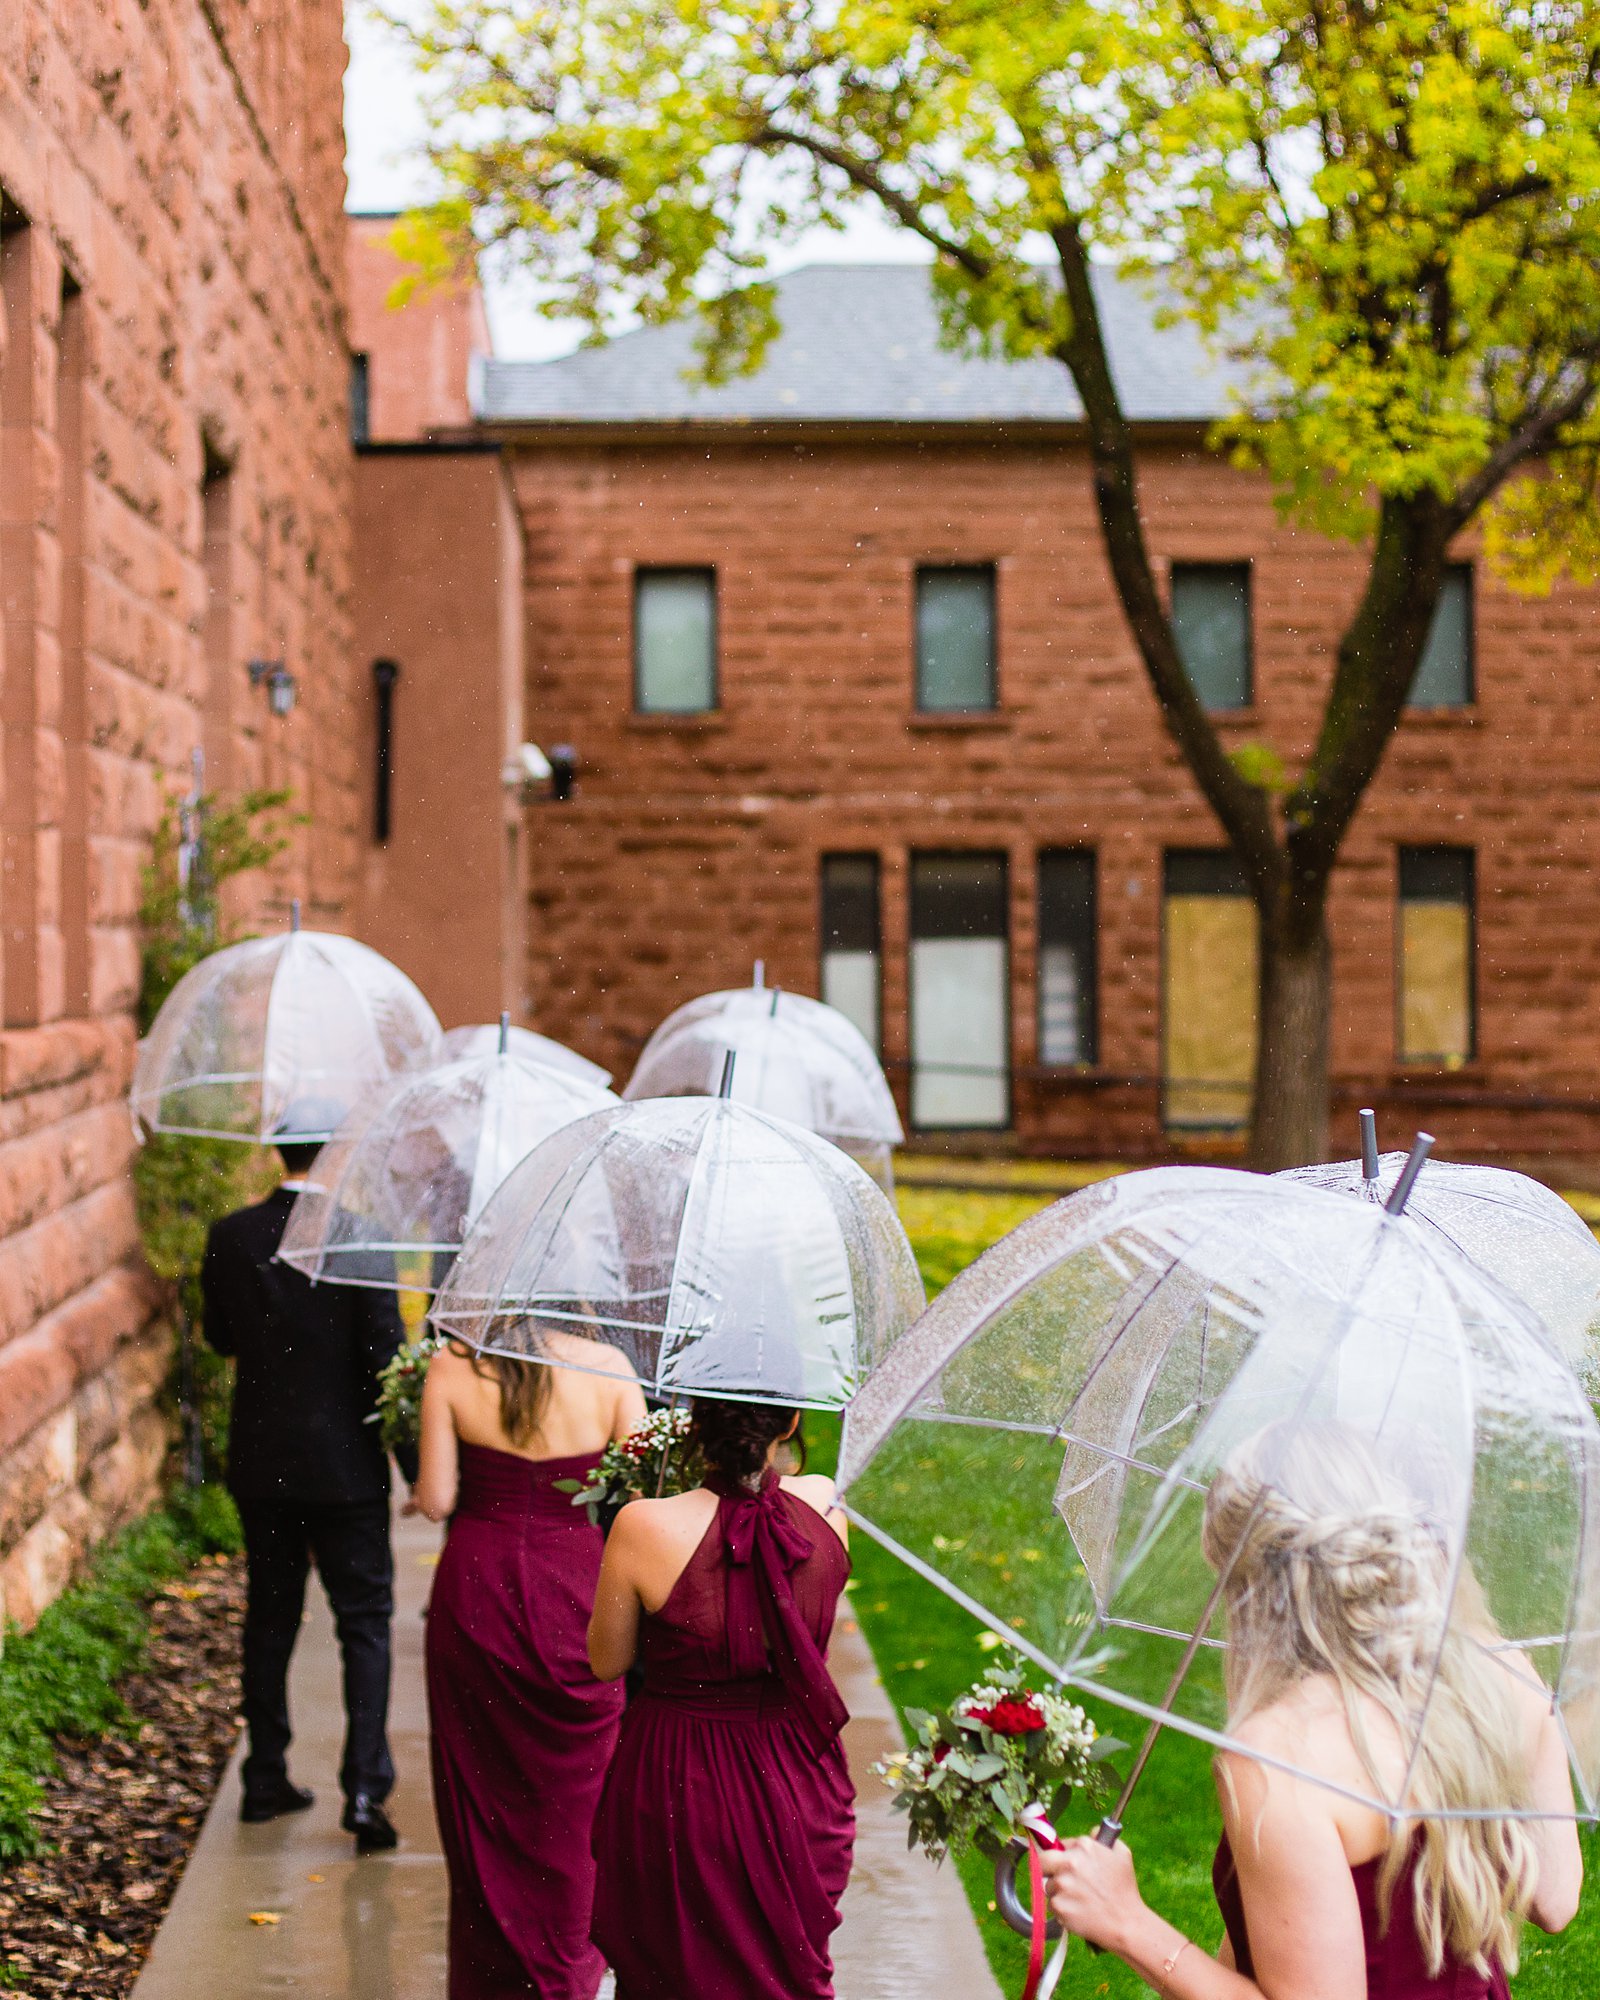 Bridal party walk with umbrellas on a rainy wedding day by Flagstaff wedding photographer PMA Photography.